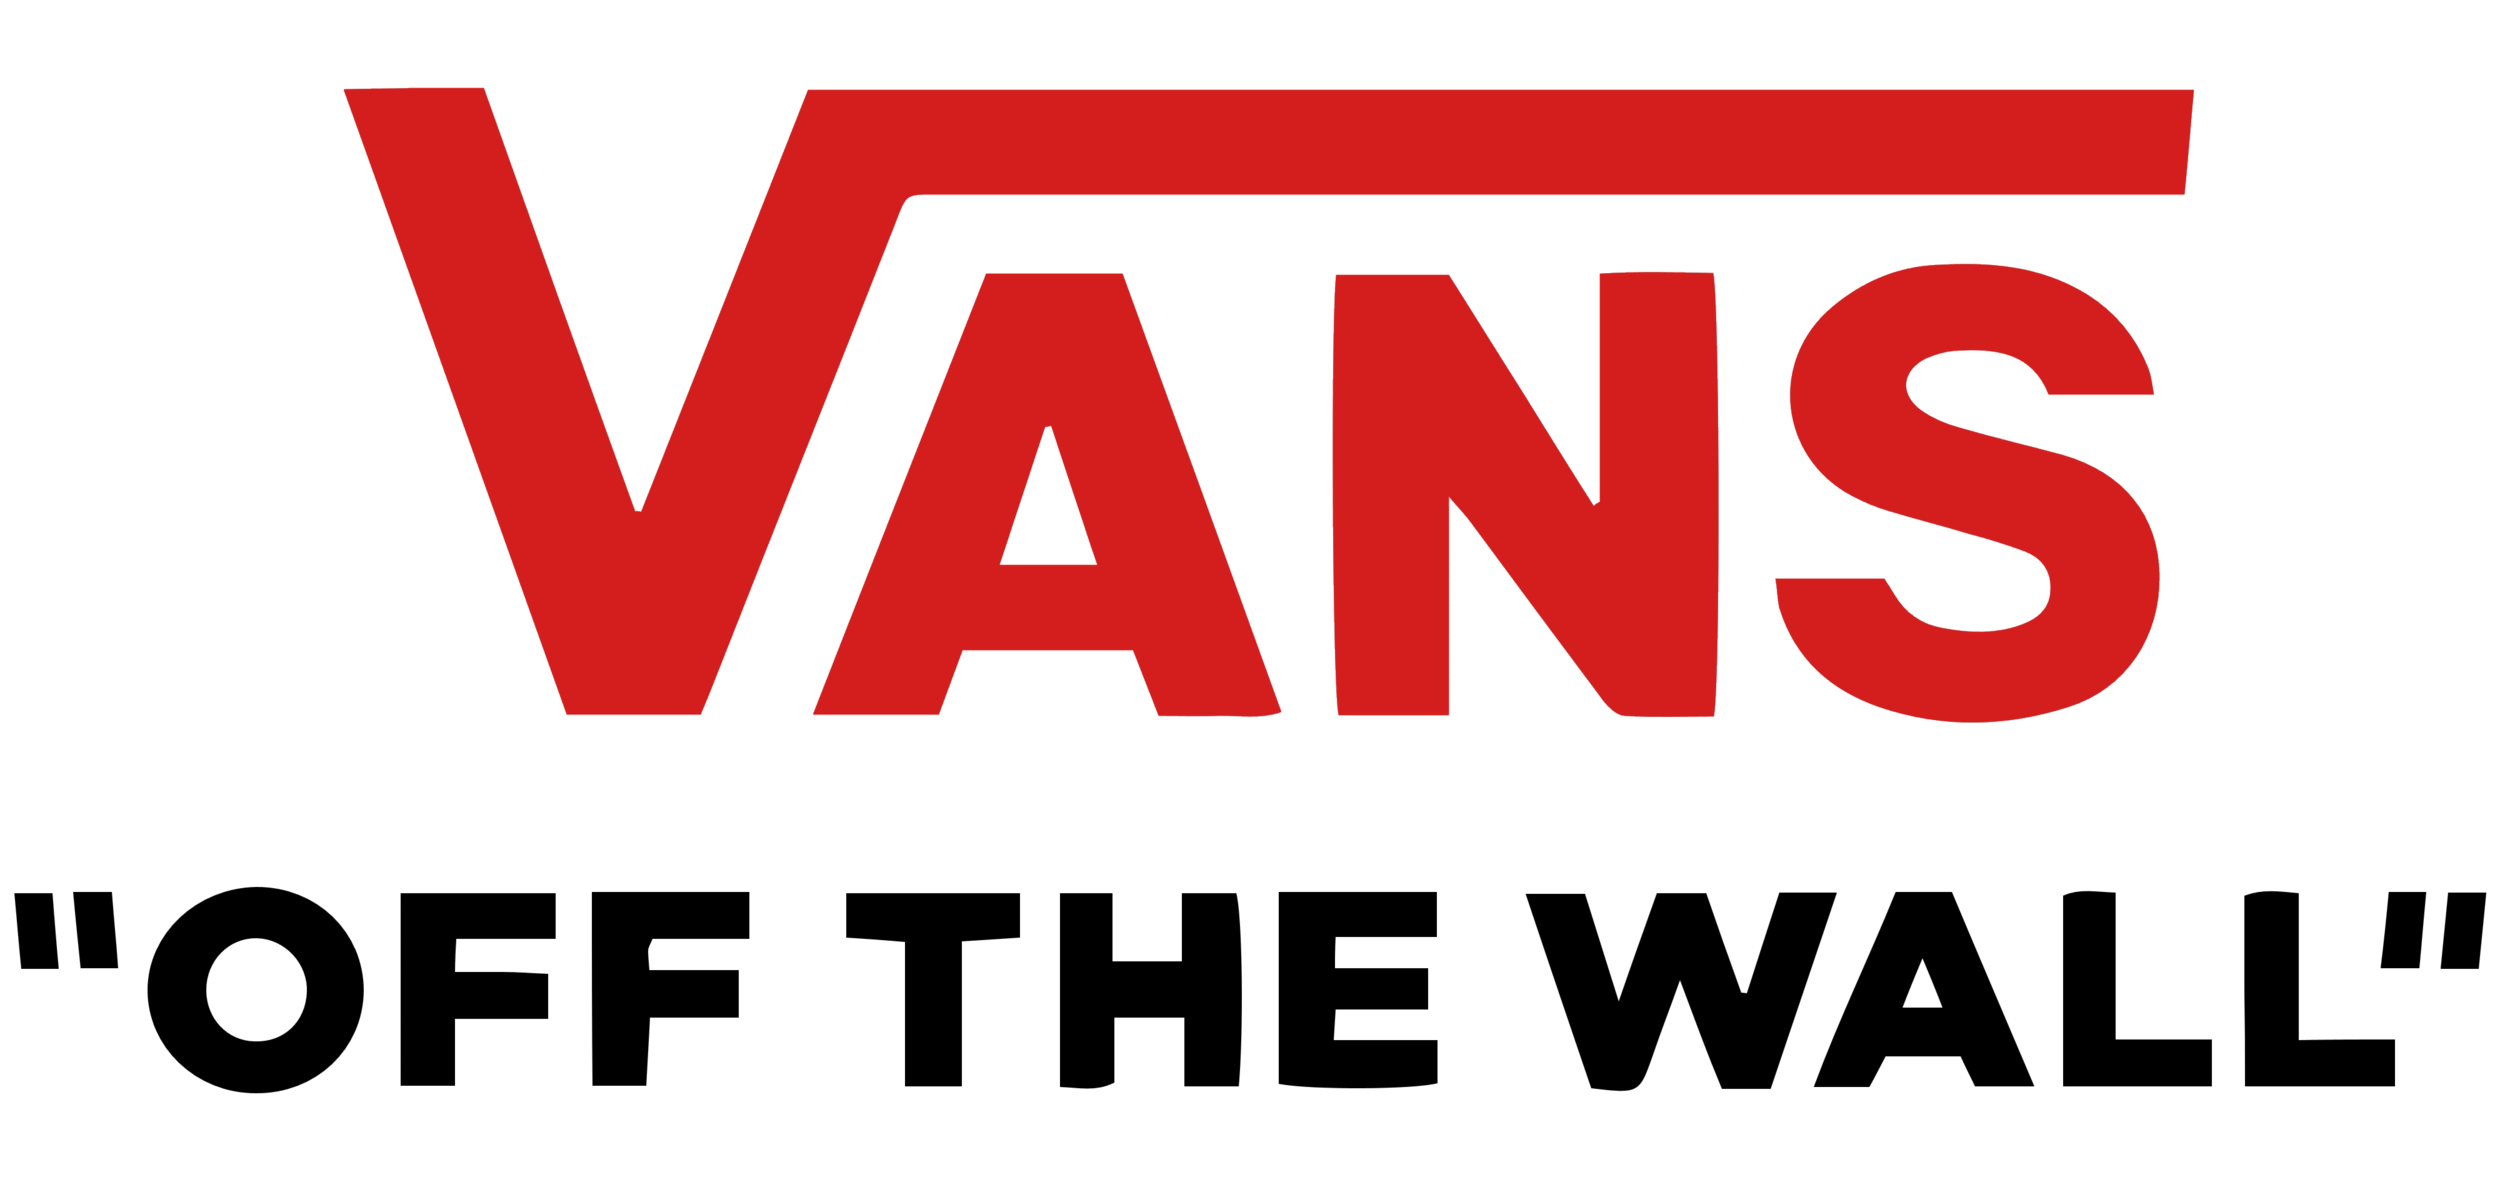 Copy of Vans_logo.png